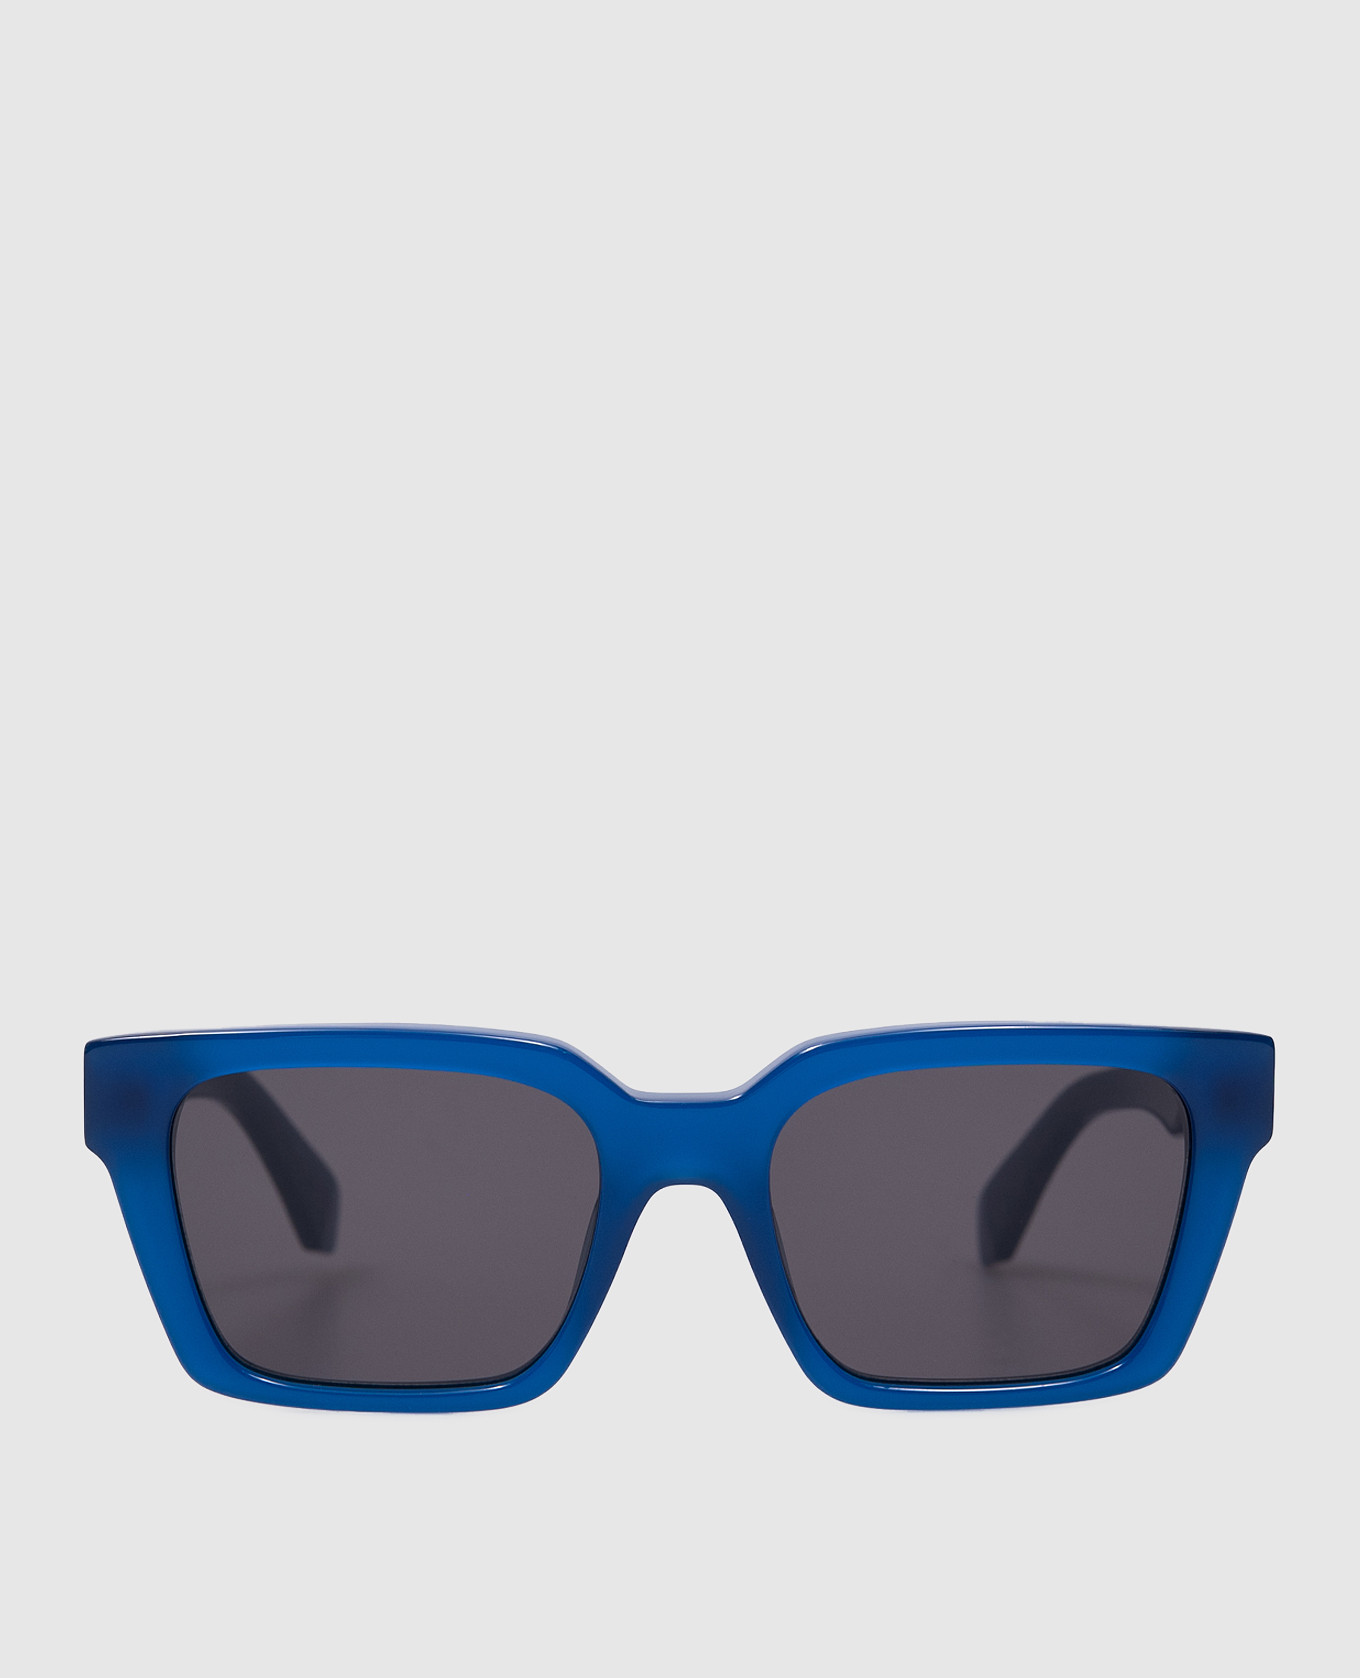 Branson blue sunglasses